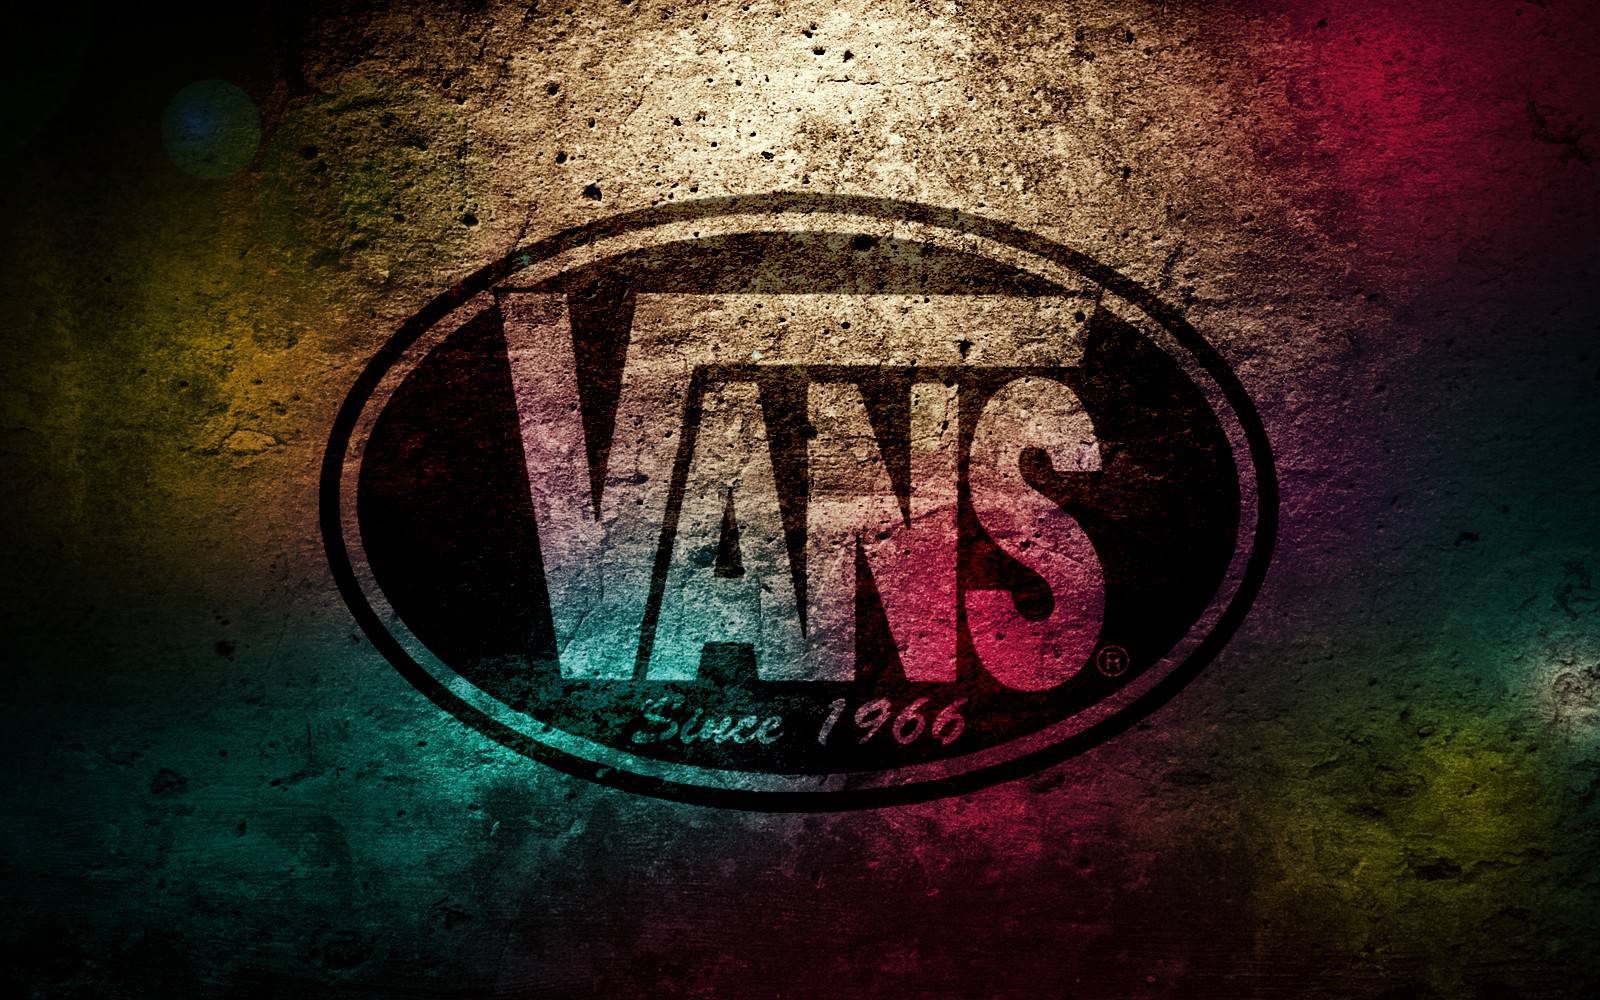 Awesome Vans Logo - Vans Logo Wallpapers - Wallpaper Cave